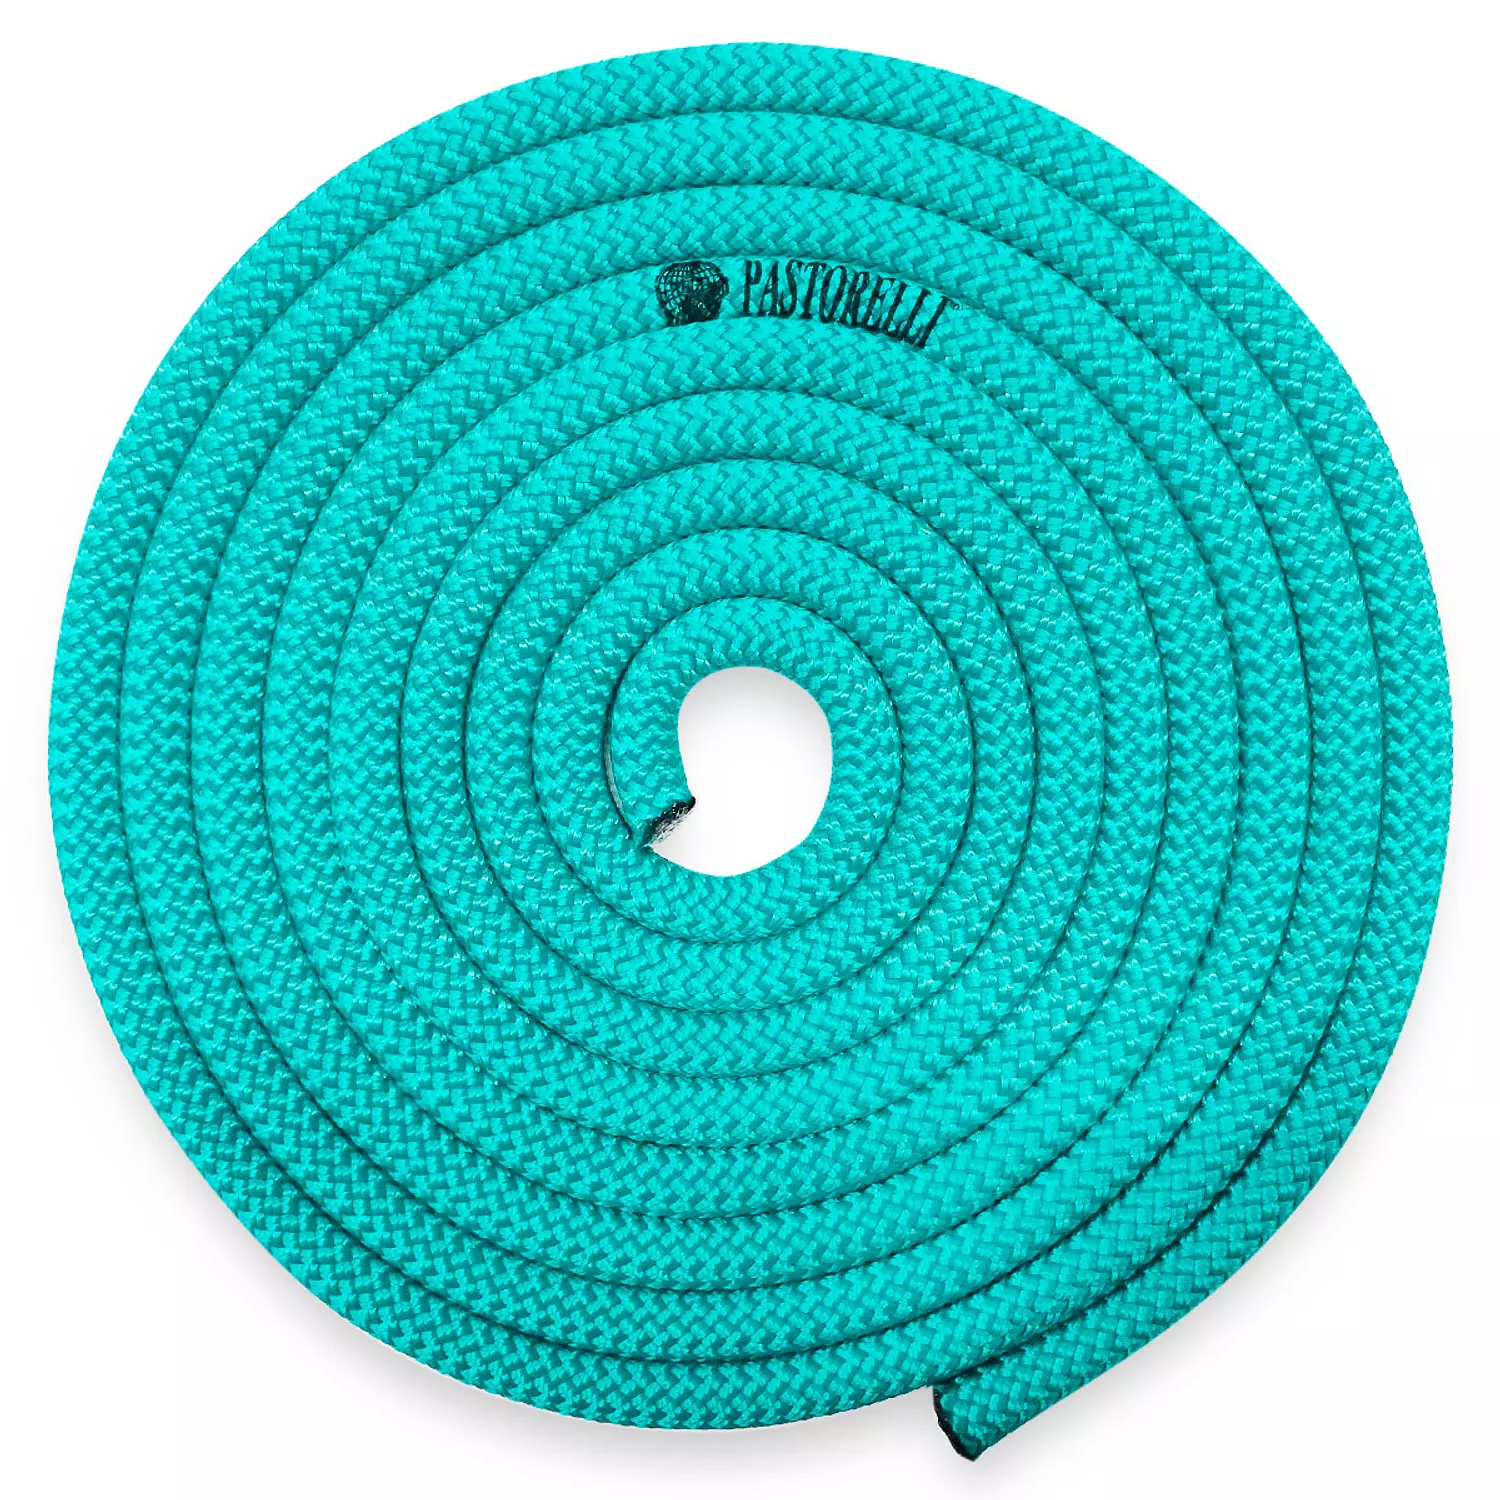 Pastorelli-New Orleans monochromatic rope FIG | 3m 8